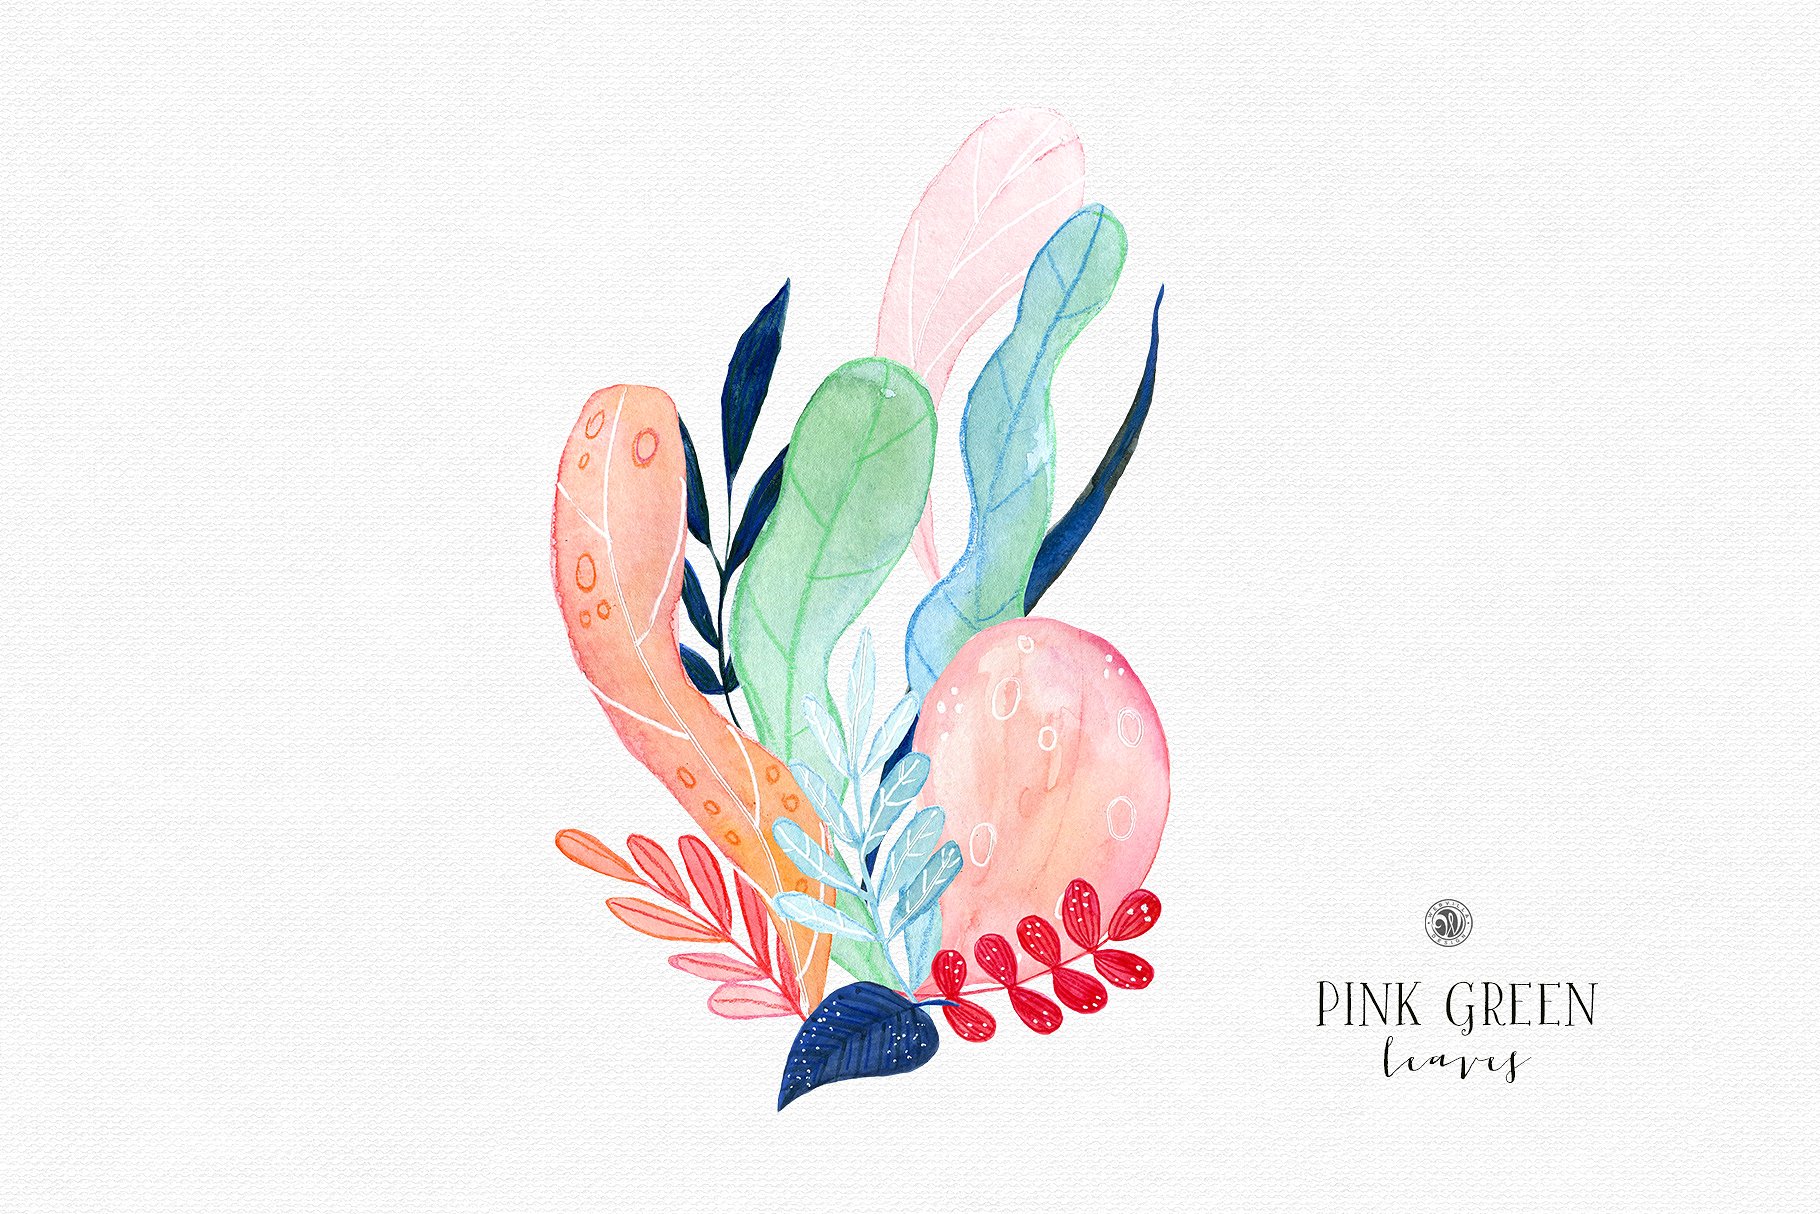 水彩手绘粉绿色叶子插画合集 Pink Green Leaves插图3